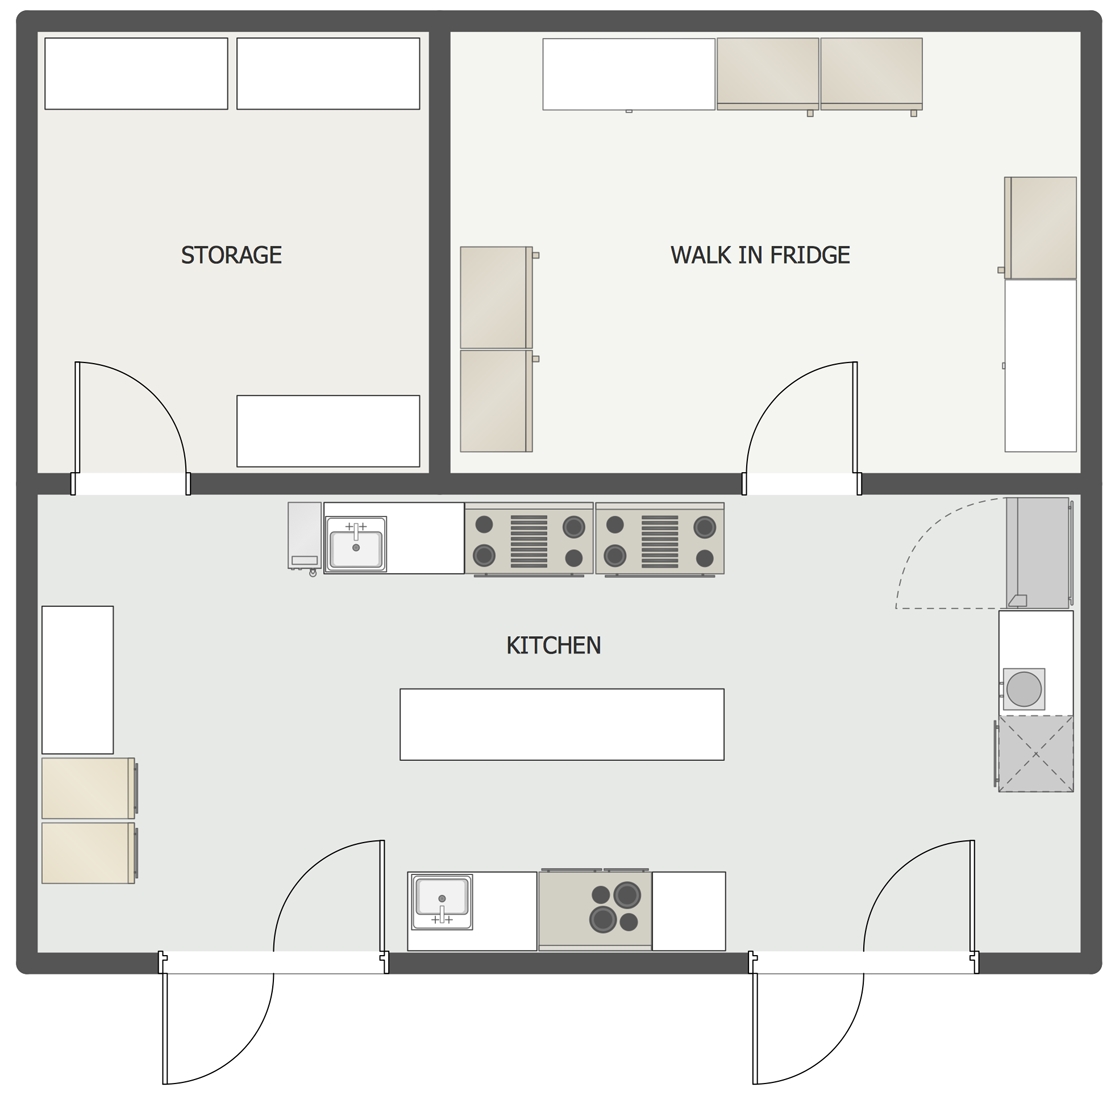 Cafe And Restaurant Floor Plan Solution Conceptdraw Com Restaurant Furniture Layout